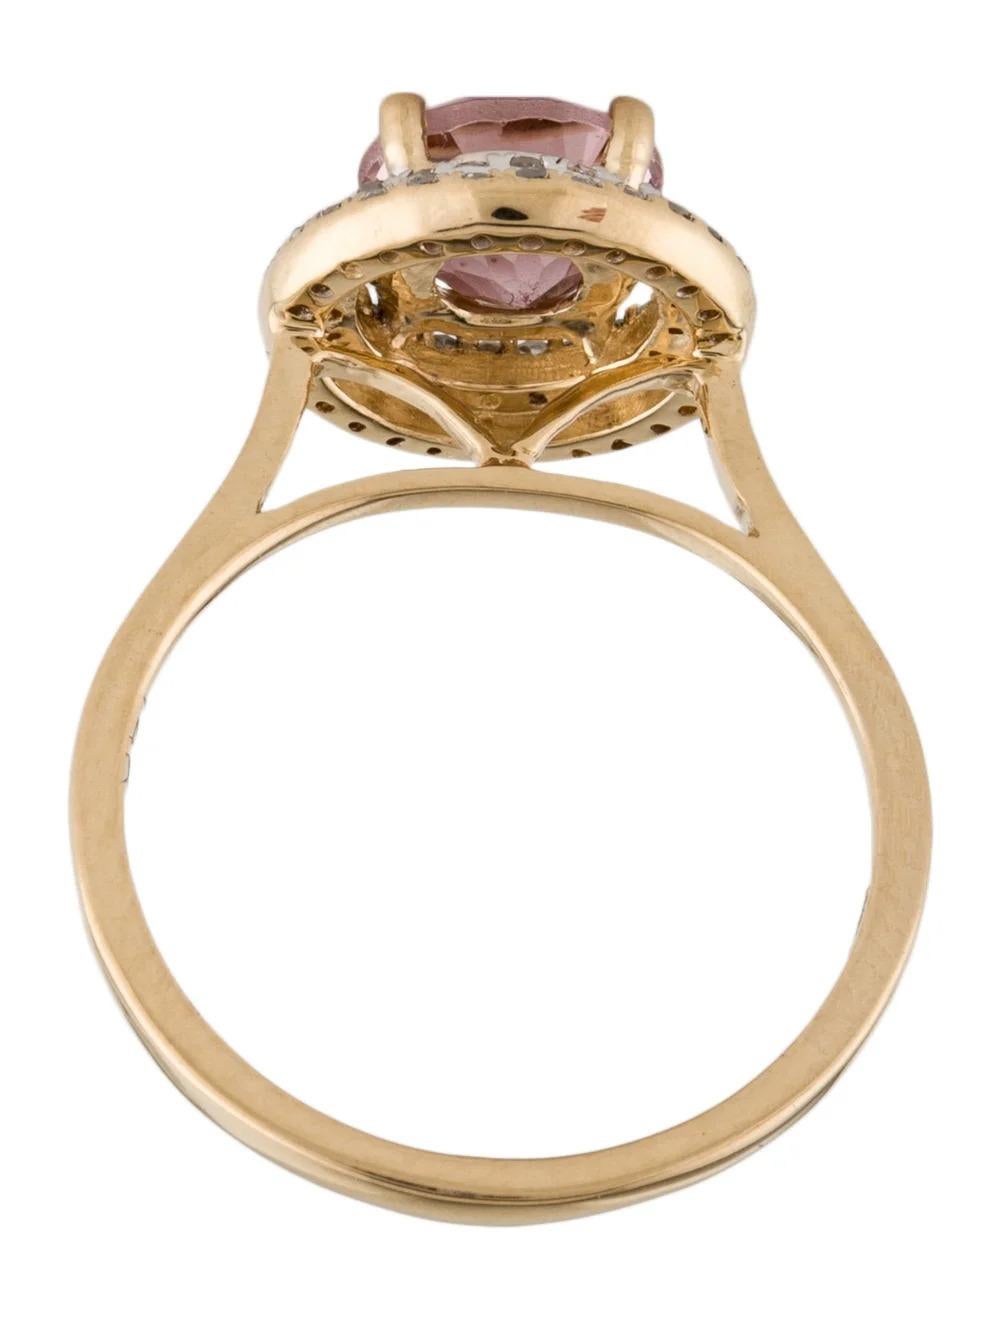 Women's 14K Tourmaline & Diamond Cocktail Ring, Size 6.5 - Elegant Statement Jewelry For Sale